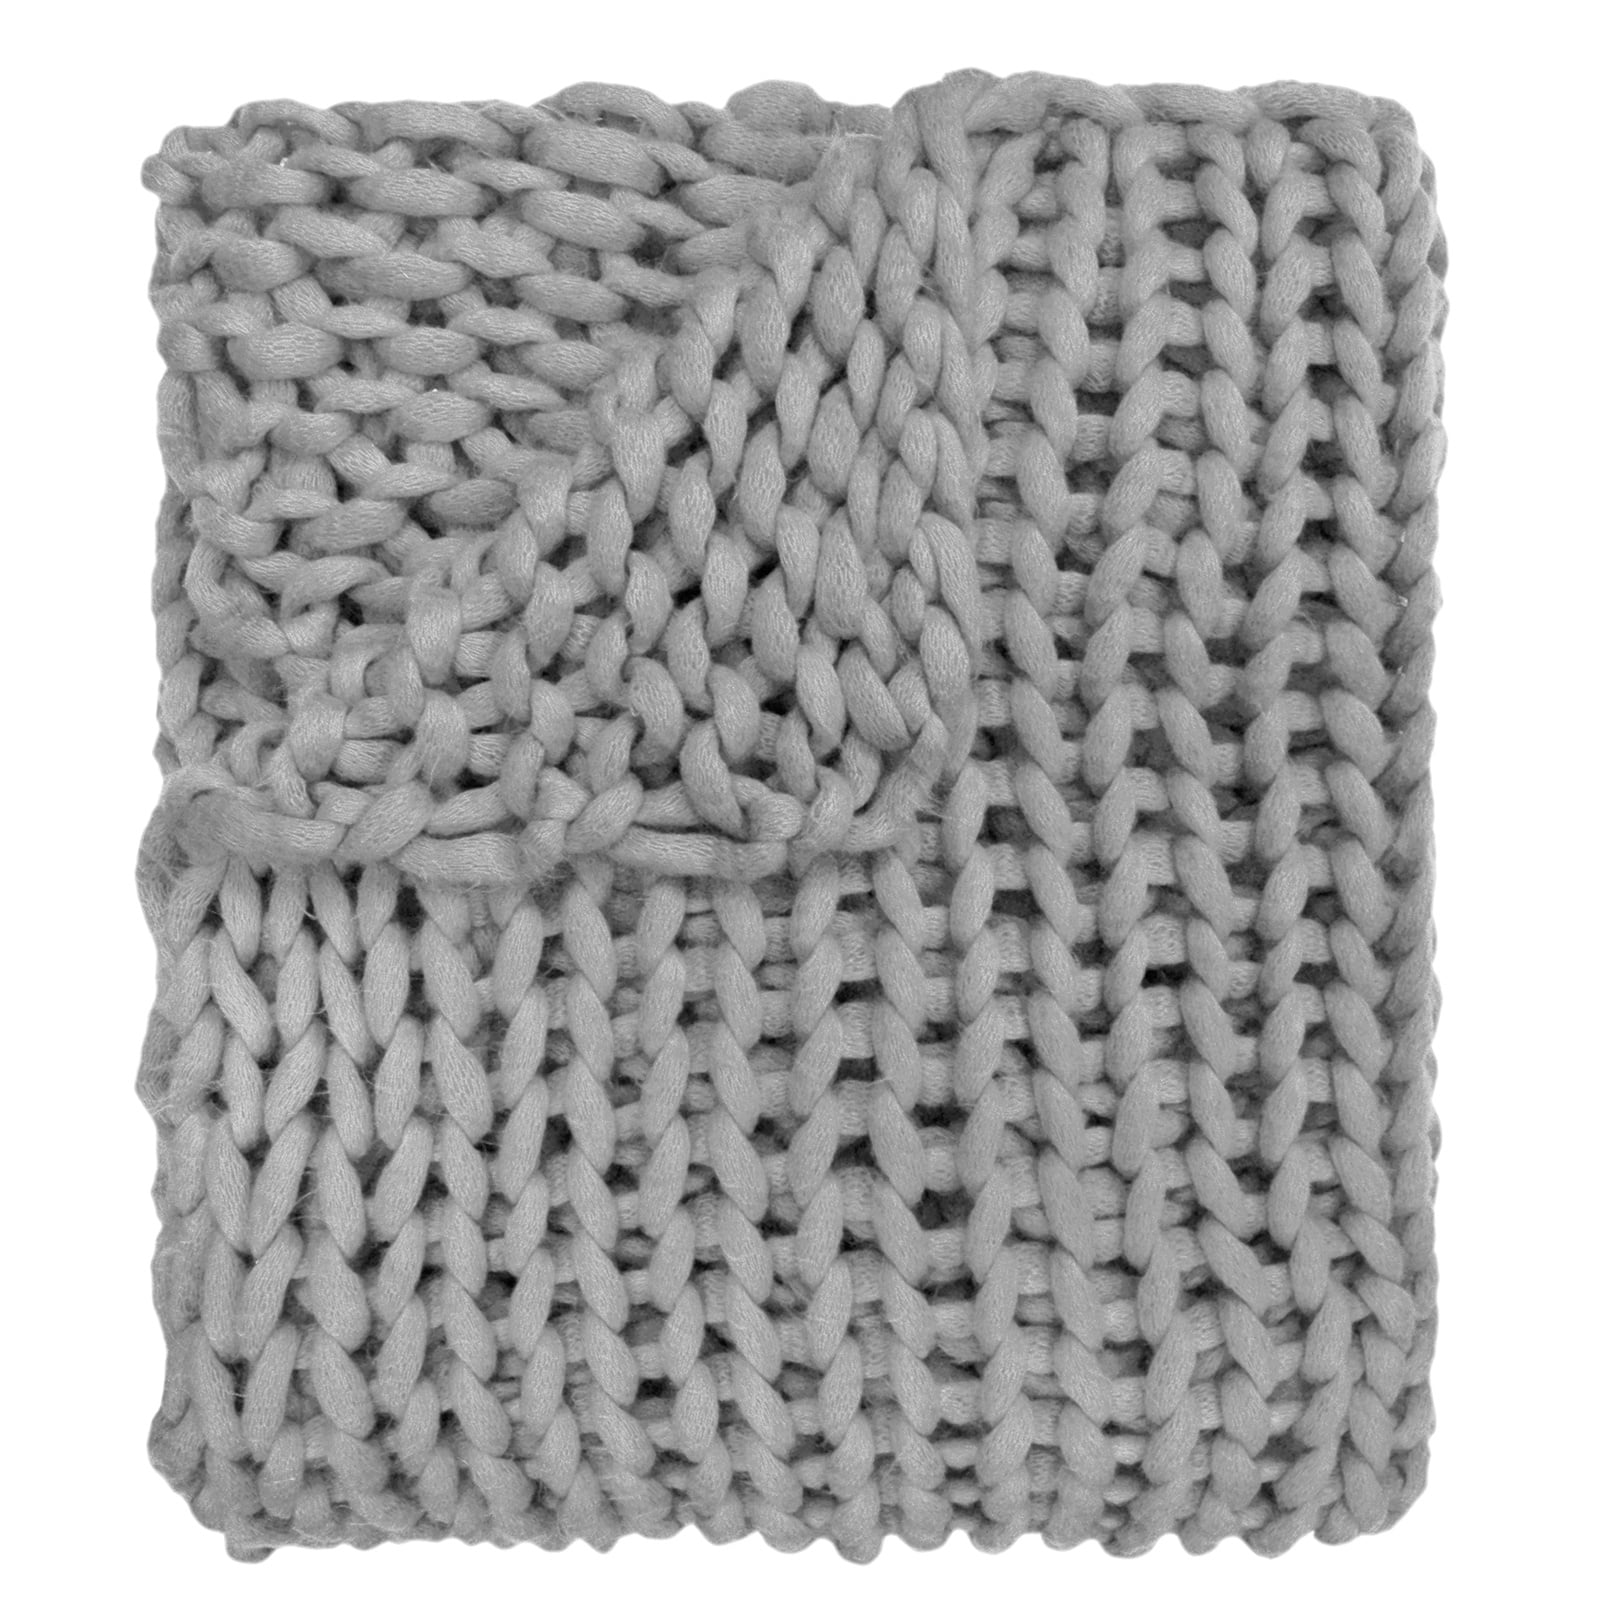 70000 40 X 50 In. Chunky Knit Throw, Grey